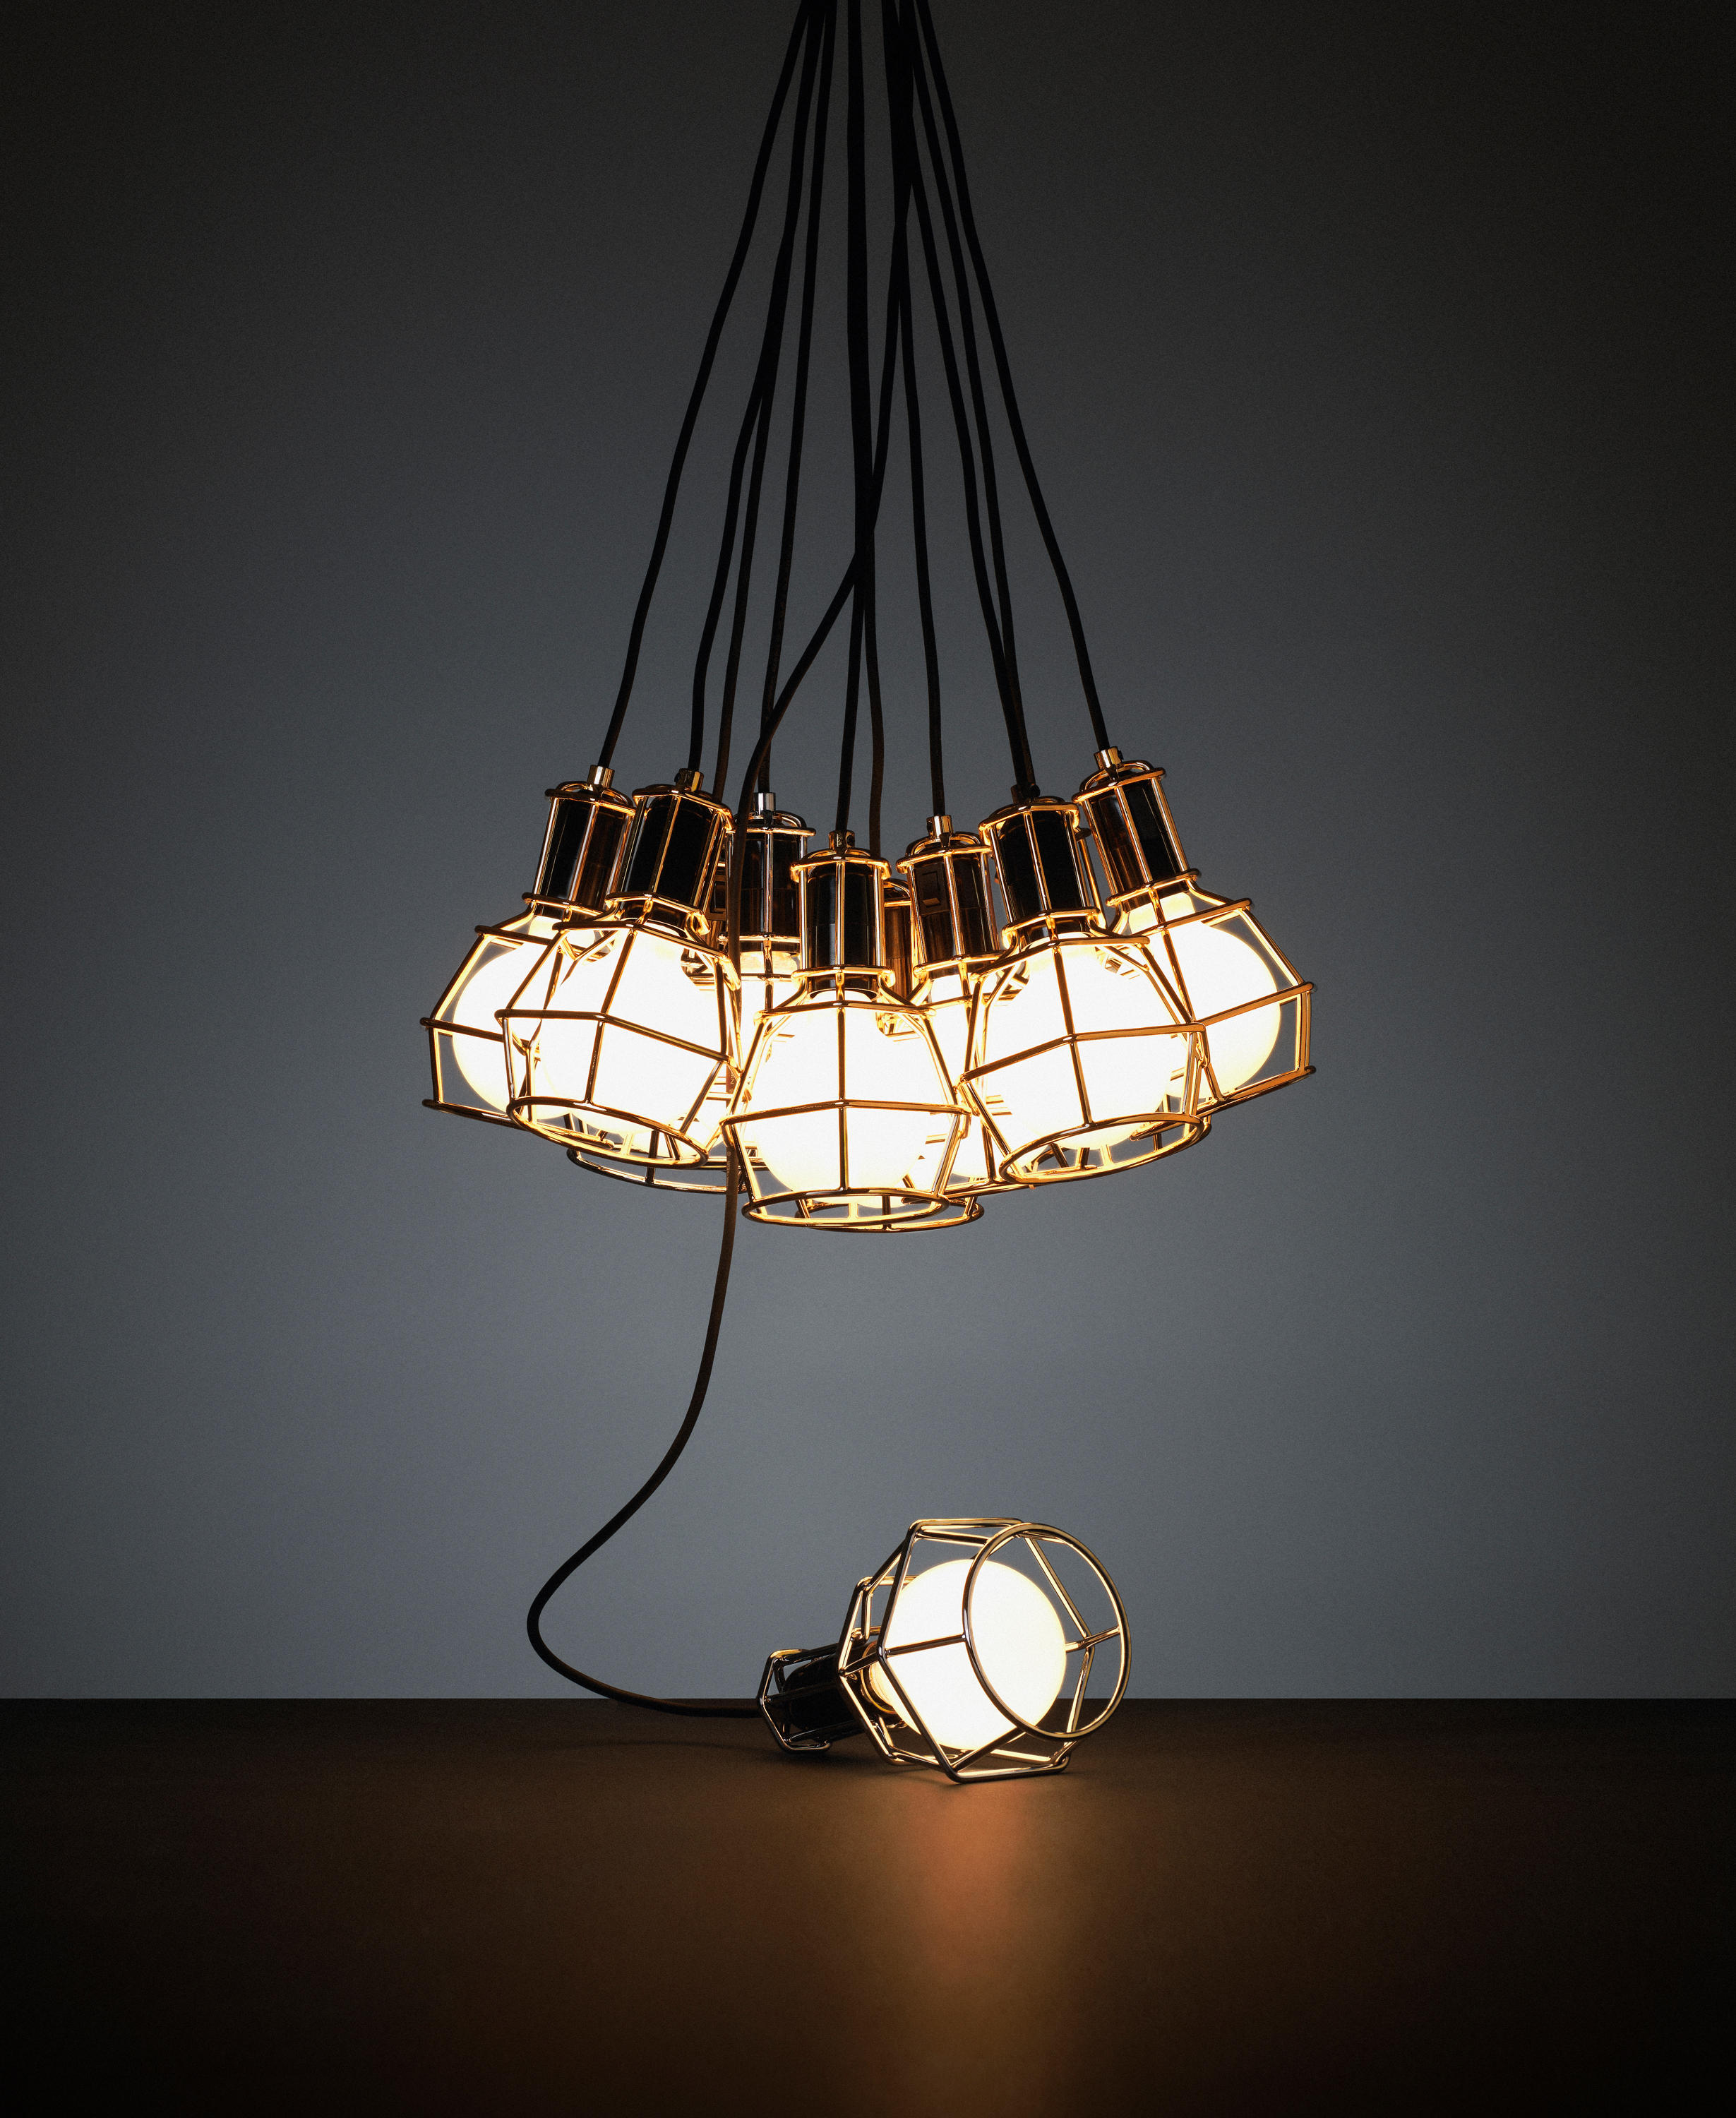 søn mild ekstremt WORK LAMP - Table lights from Design House Stockholm | Architonic